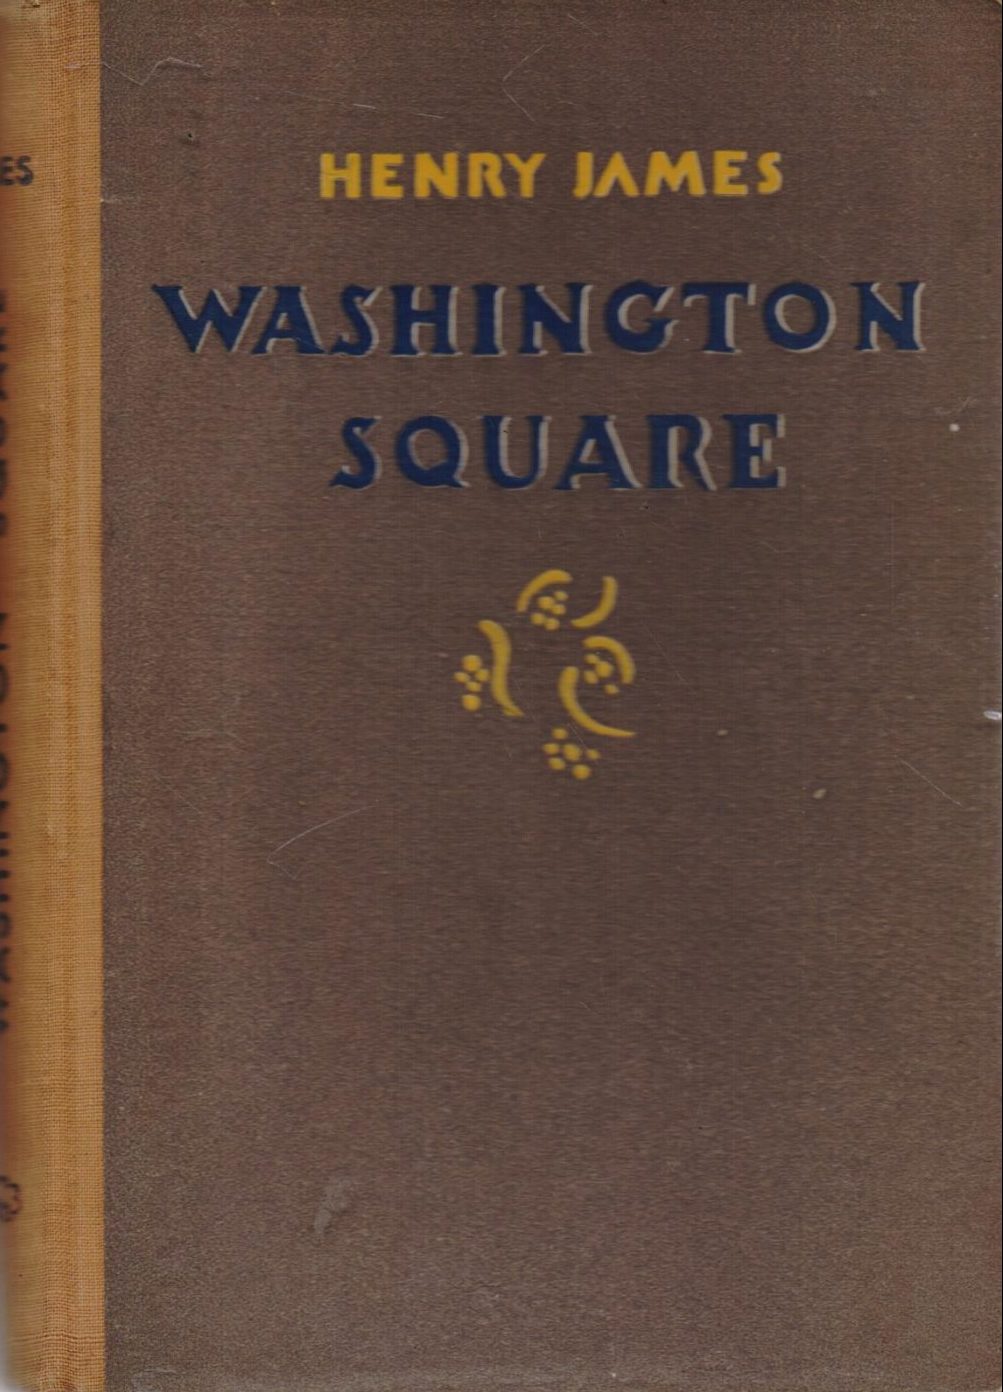 James Henry Washington square